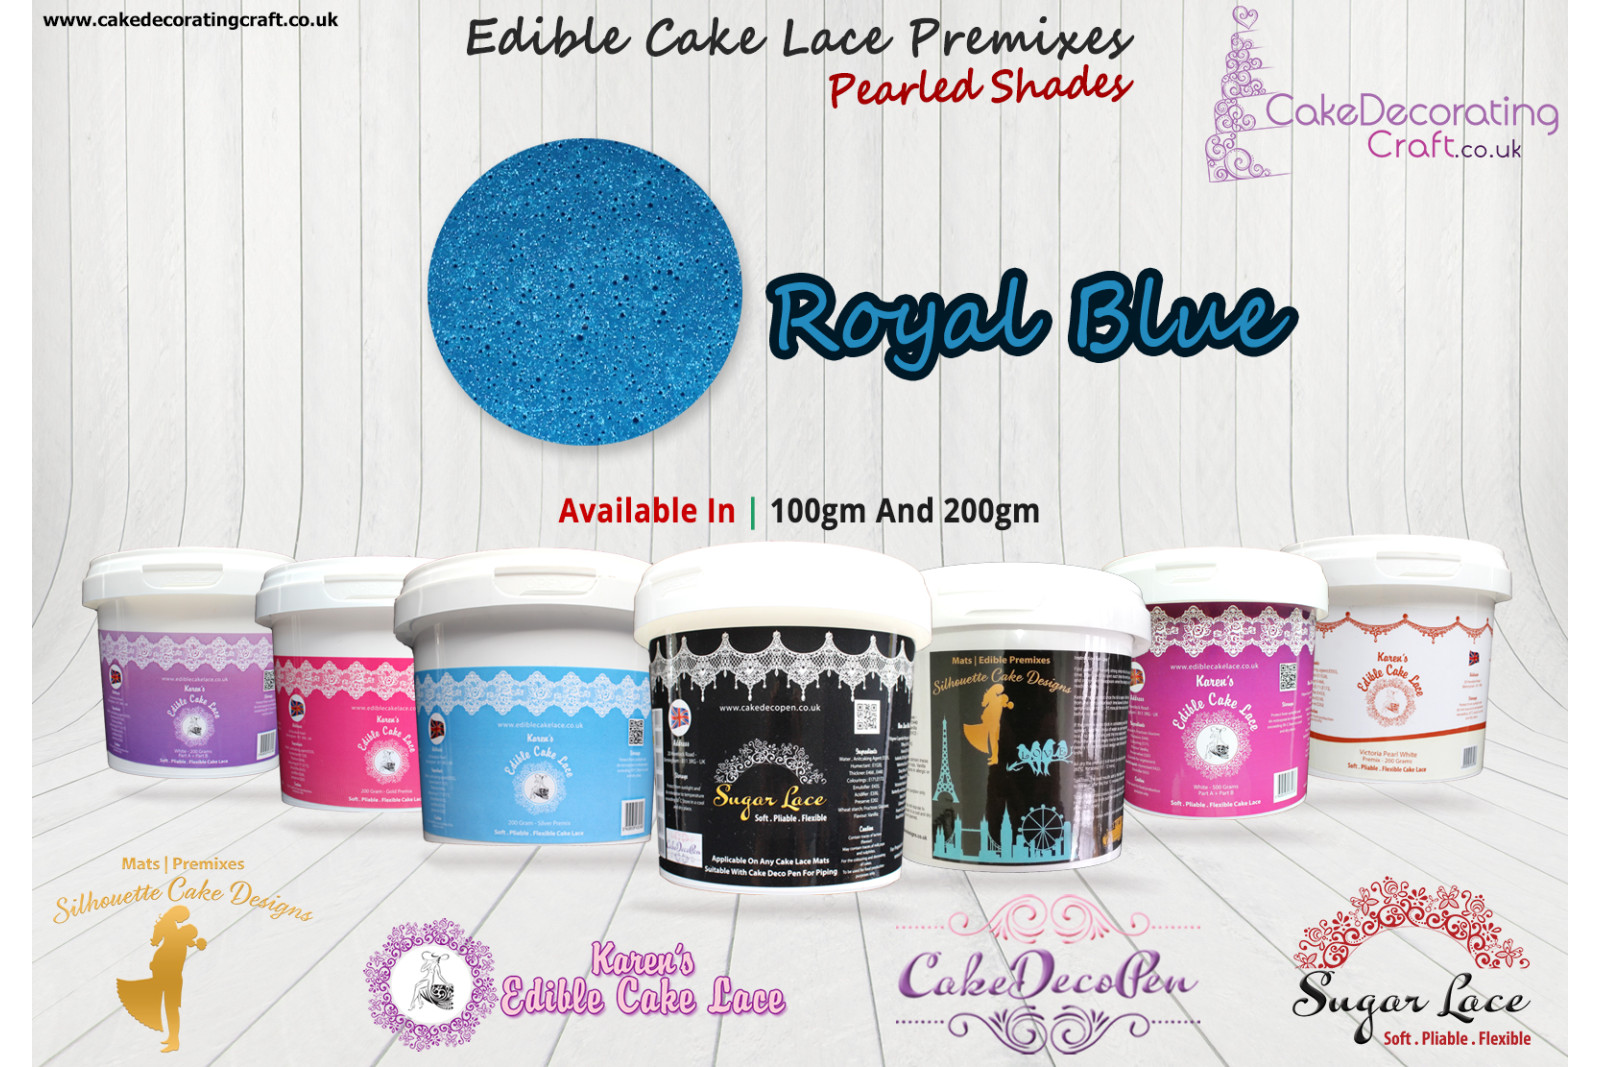 Royal Blue Colour | Silhouette Cake Design Premixes | Pearled Shade | 200 Grams